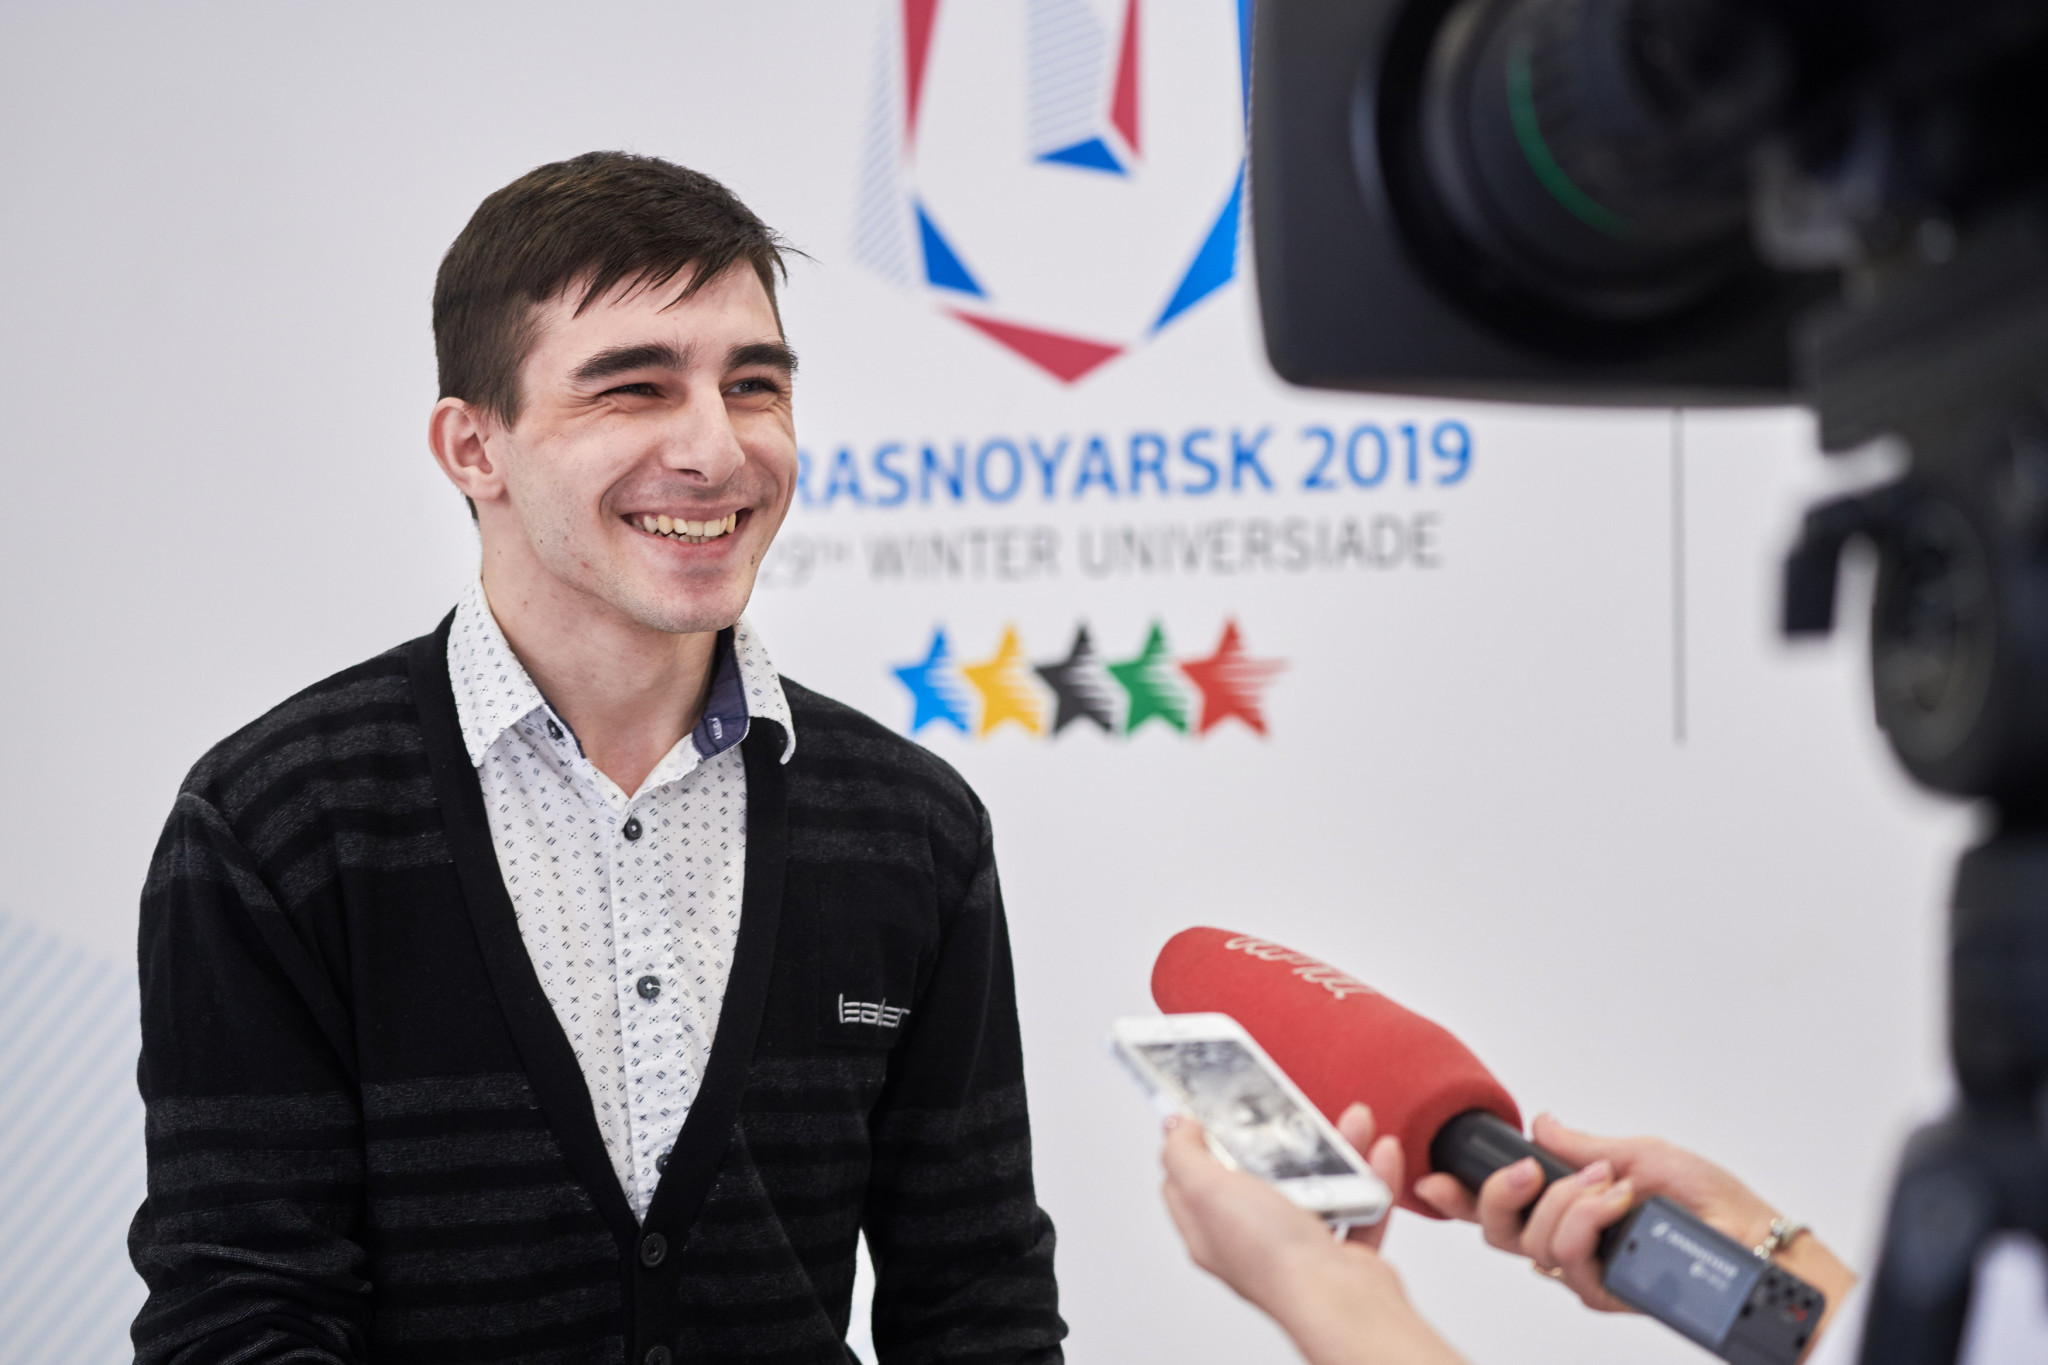 About 5,000 volunteers are expected to be involved in Krasnoyarsk 2019 activities ©Krasnoyarsk 2019